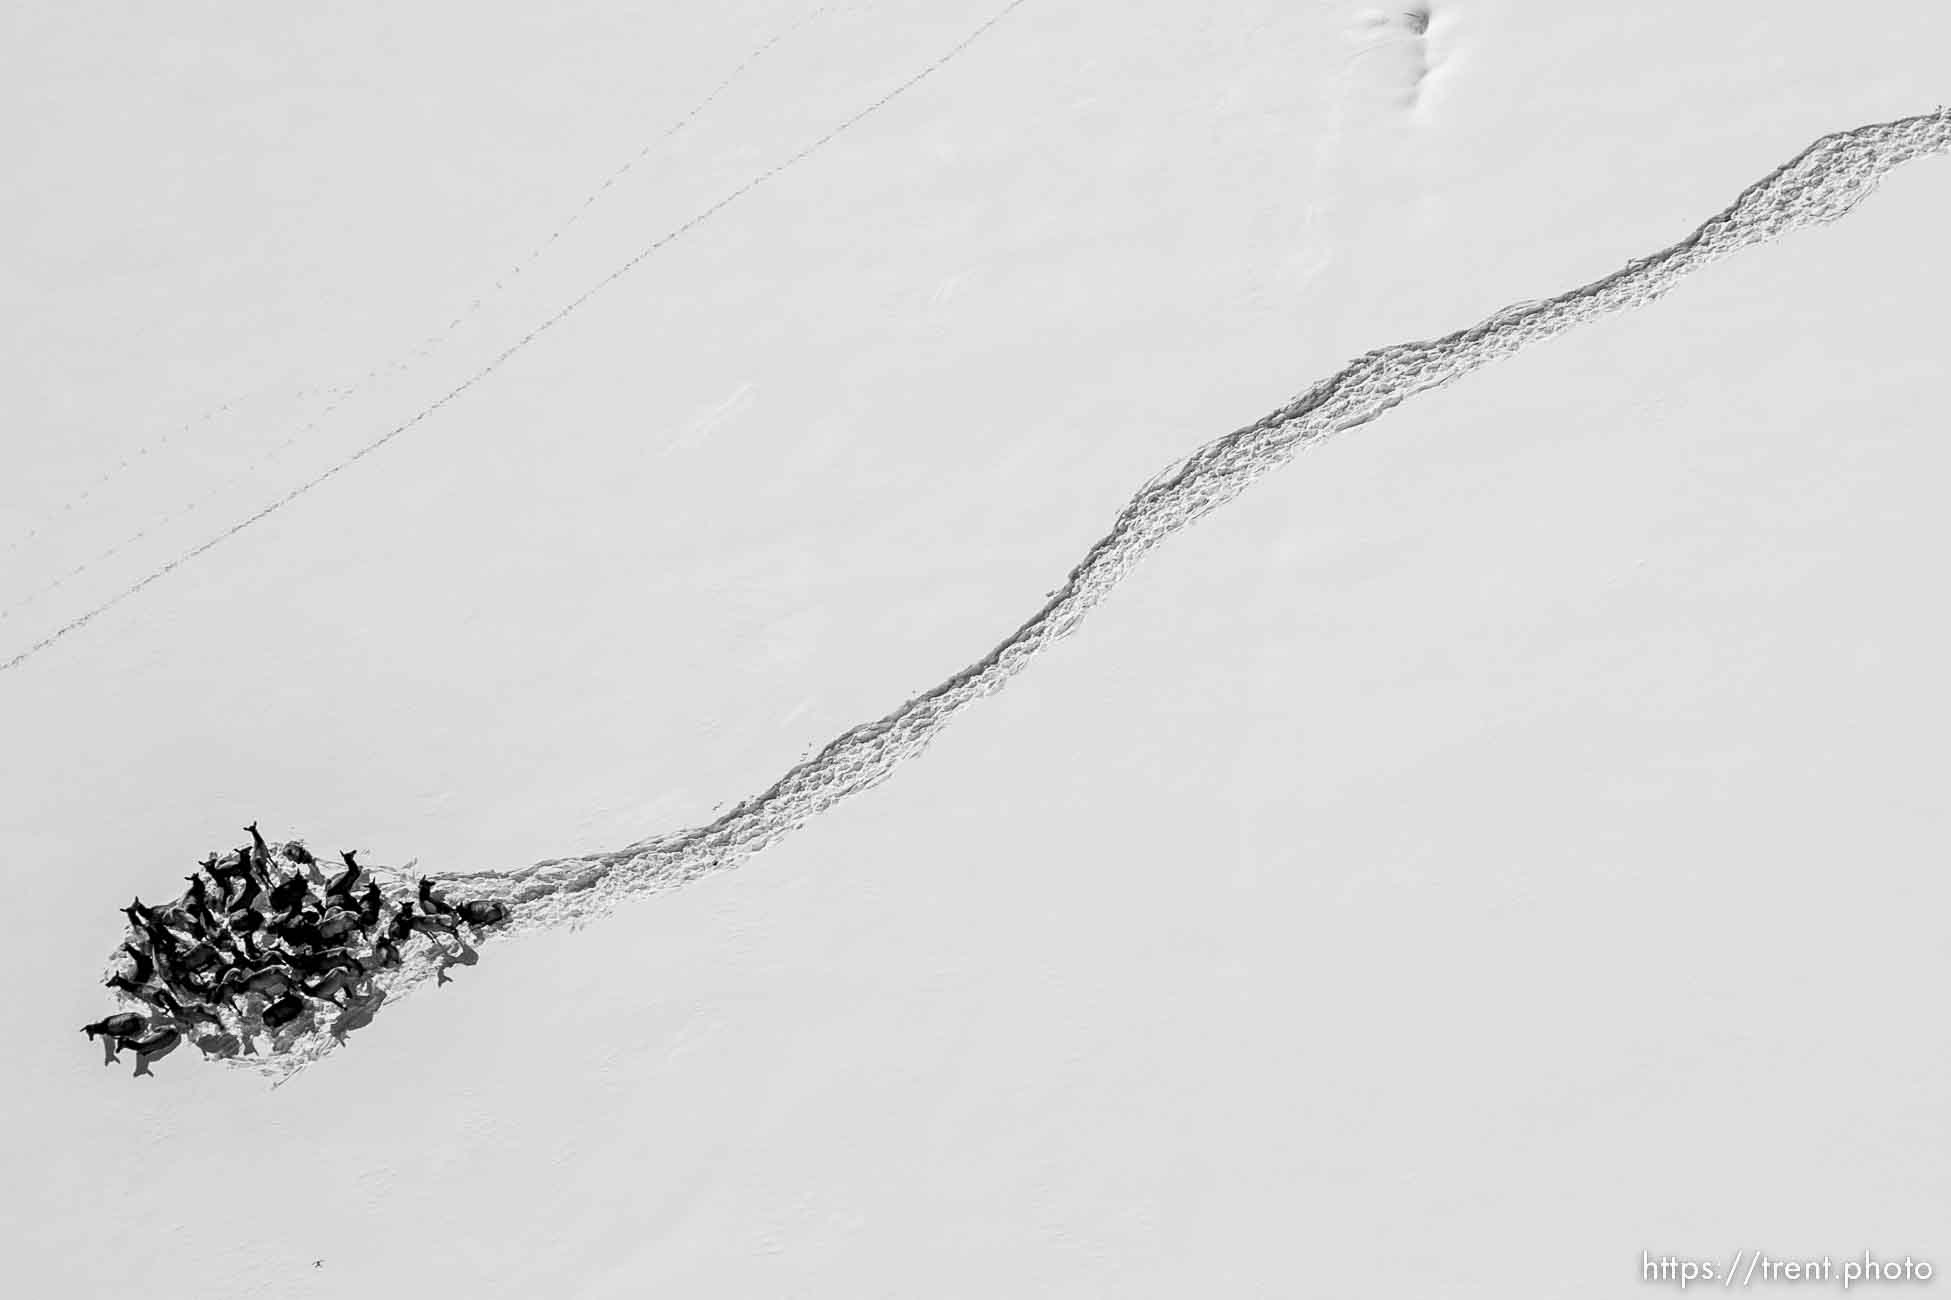 flying above a herd of elk in the snow